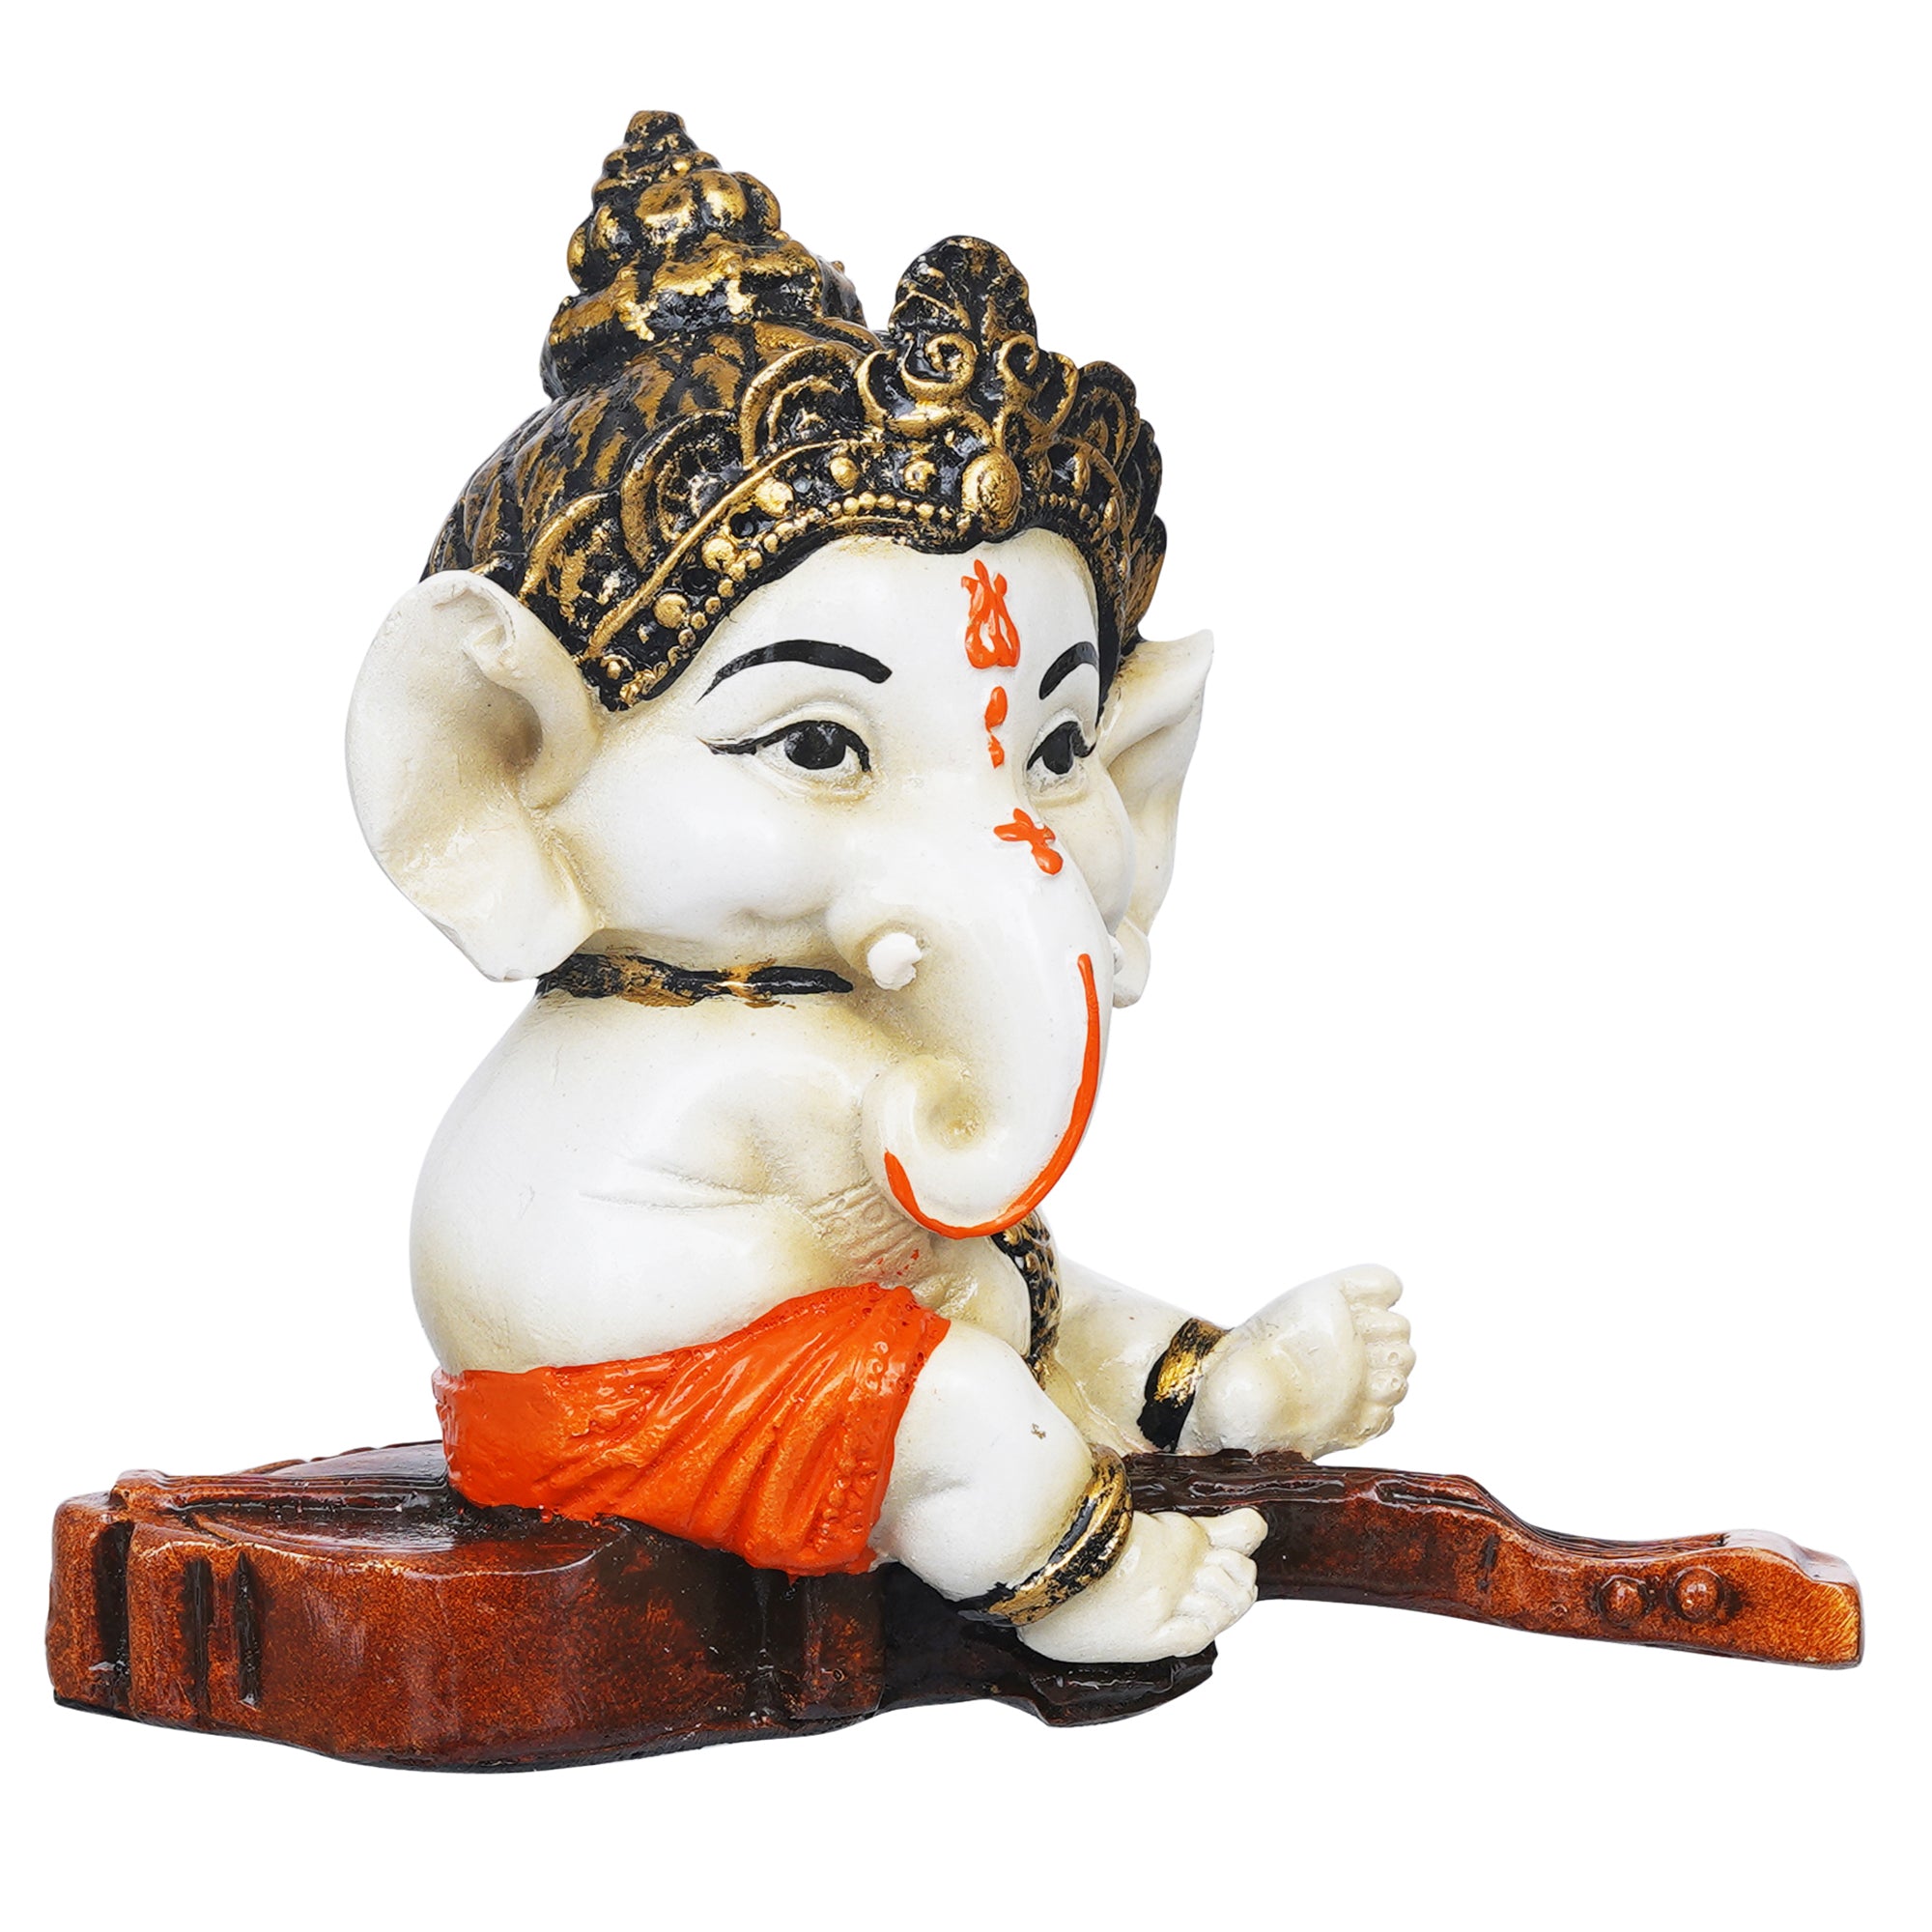 eCraftIndia Orange Polyresin Decorated Lord Ganesha Idol Sitting on Veena Musical Instrument 6